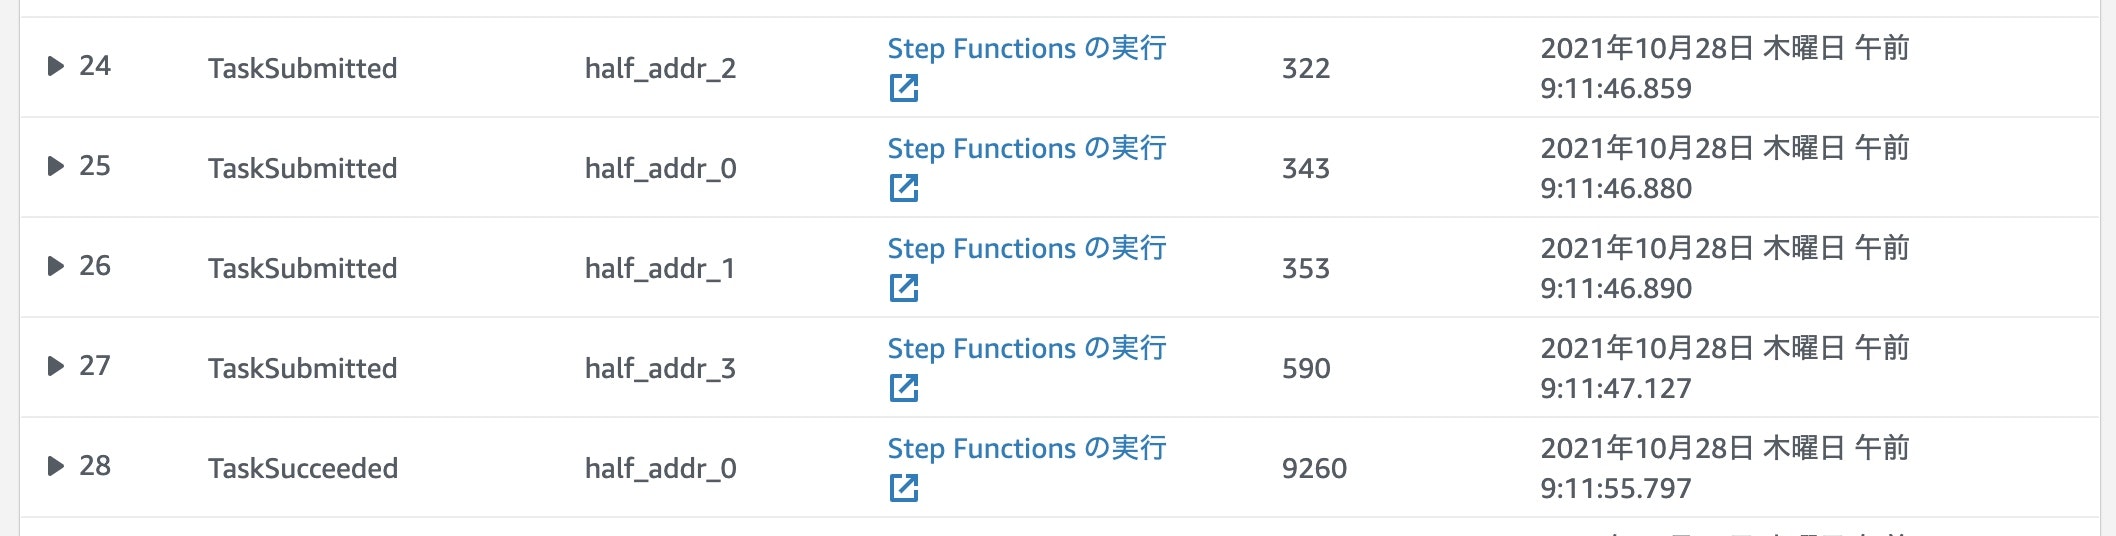 step_functions_4bit_adder_result2.jpg